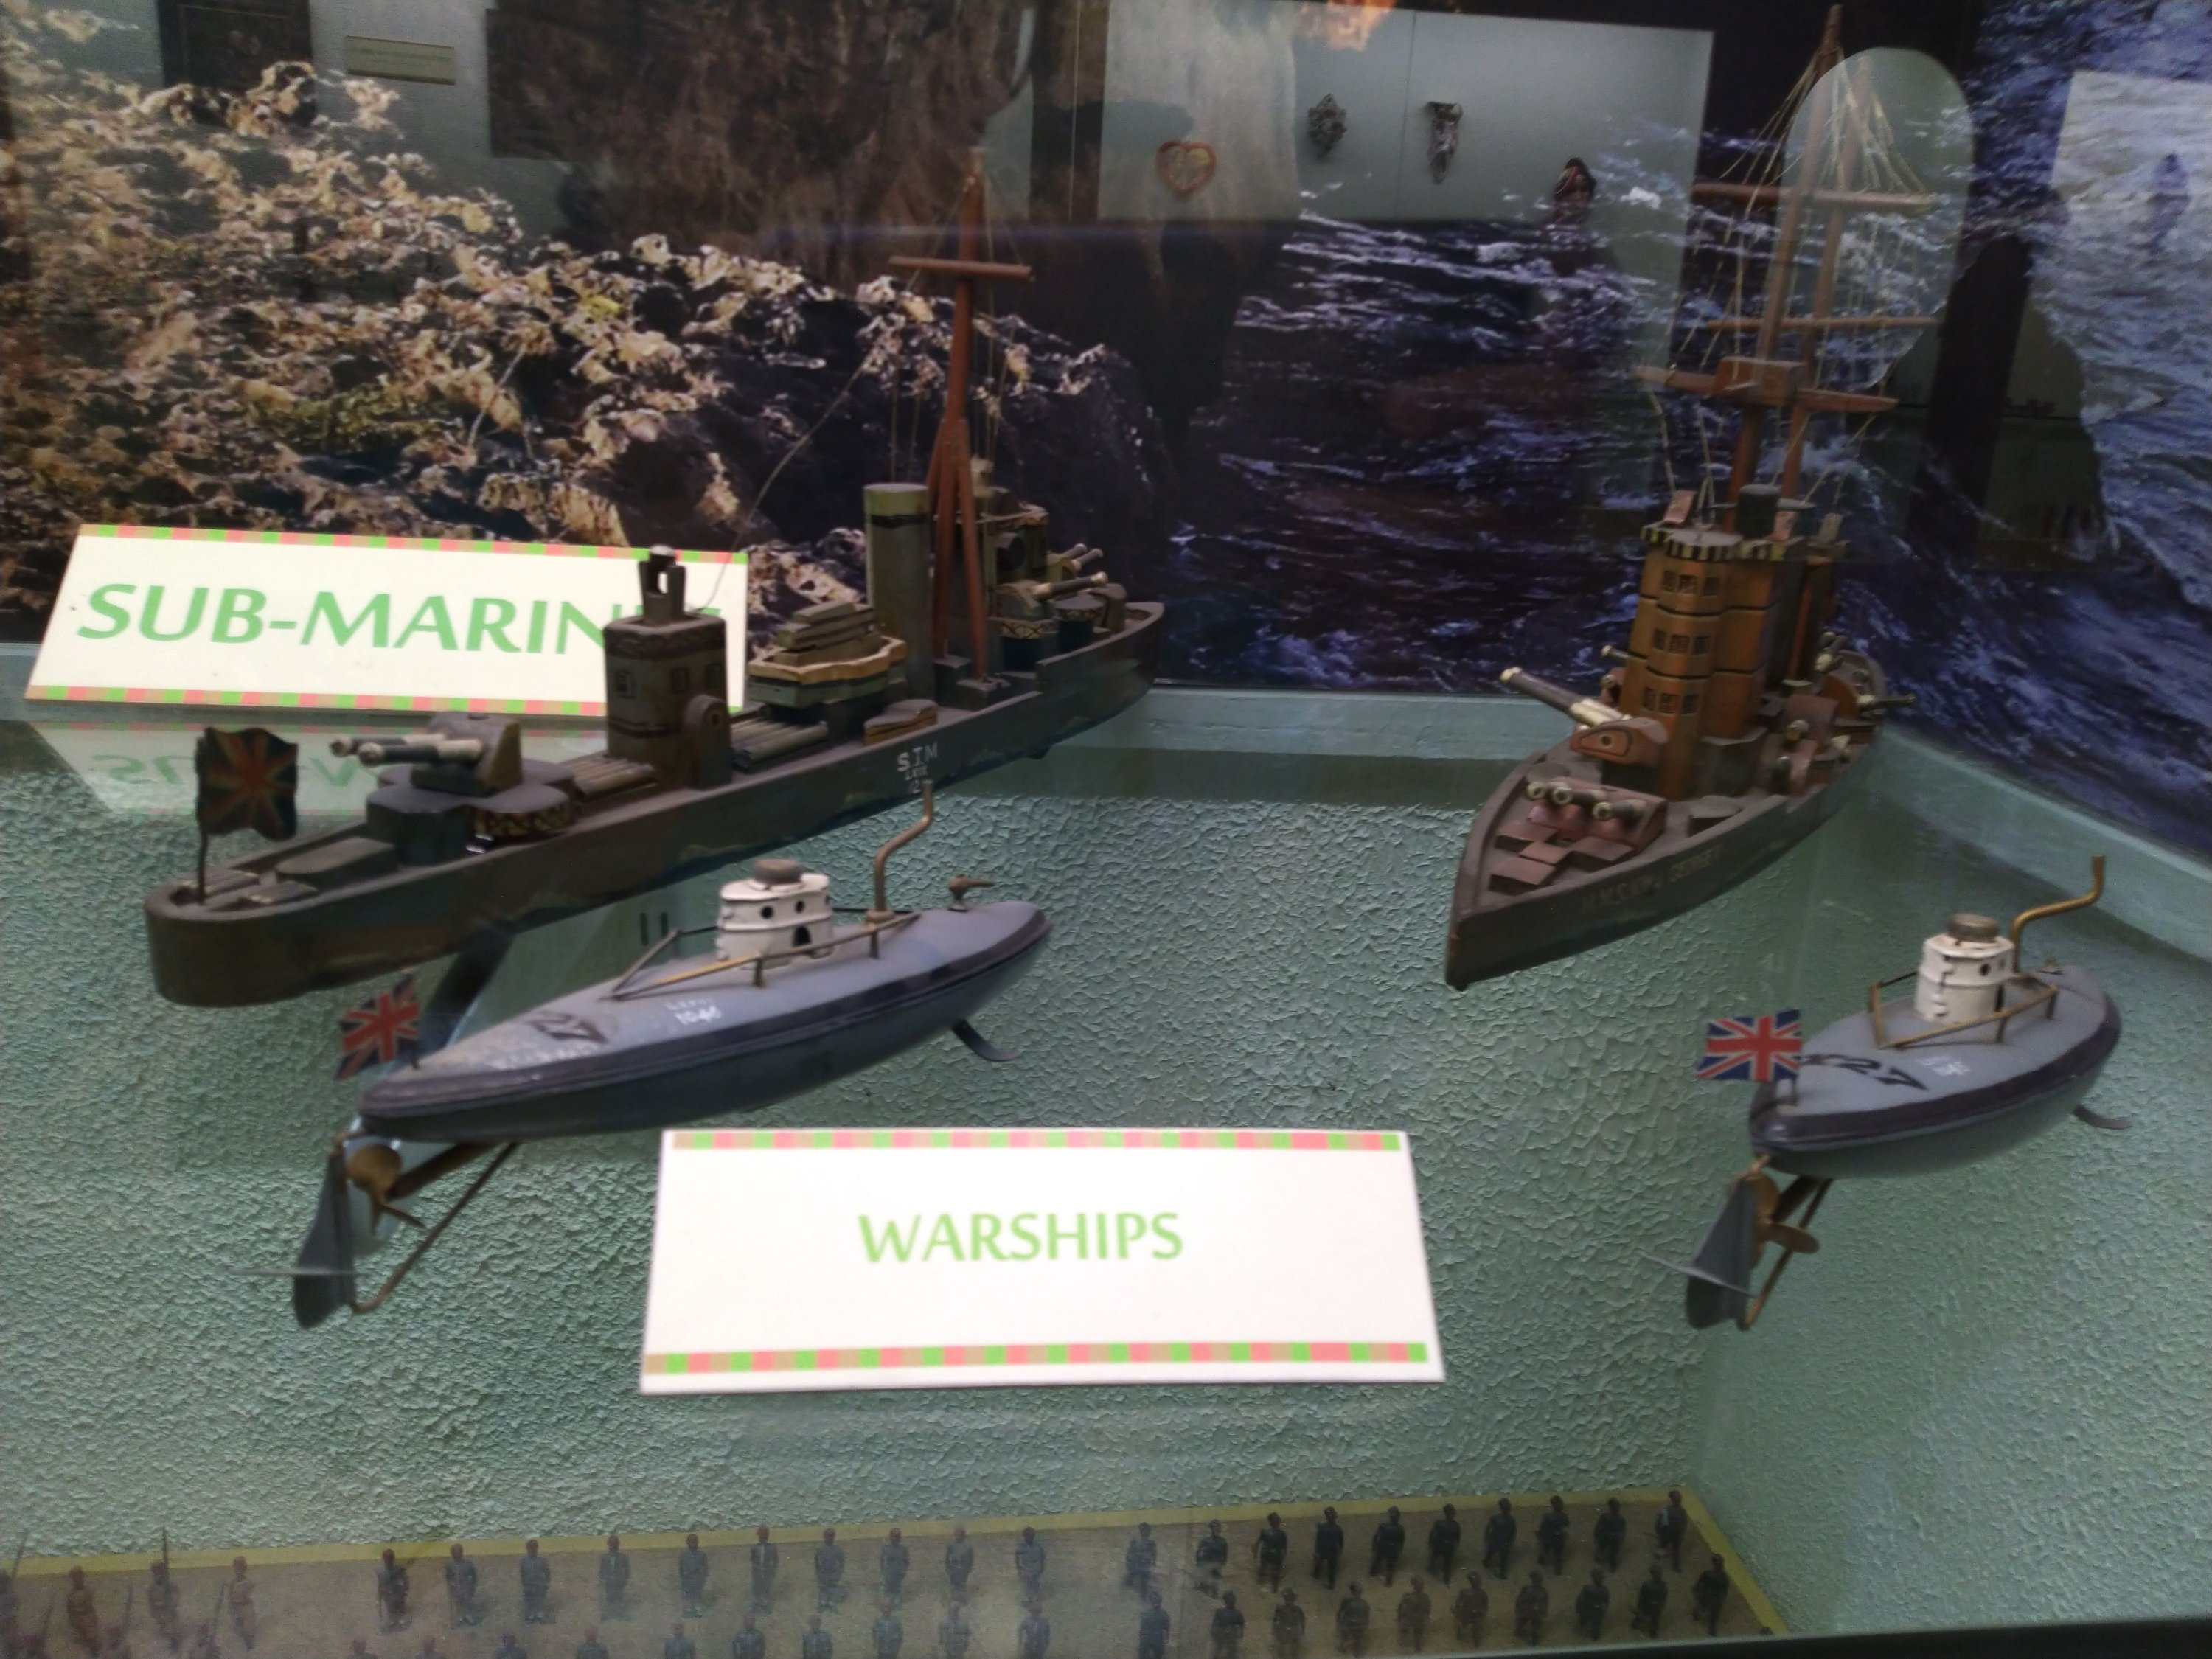 Submarines and warships